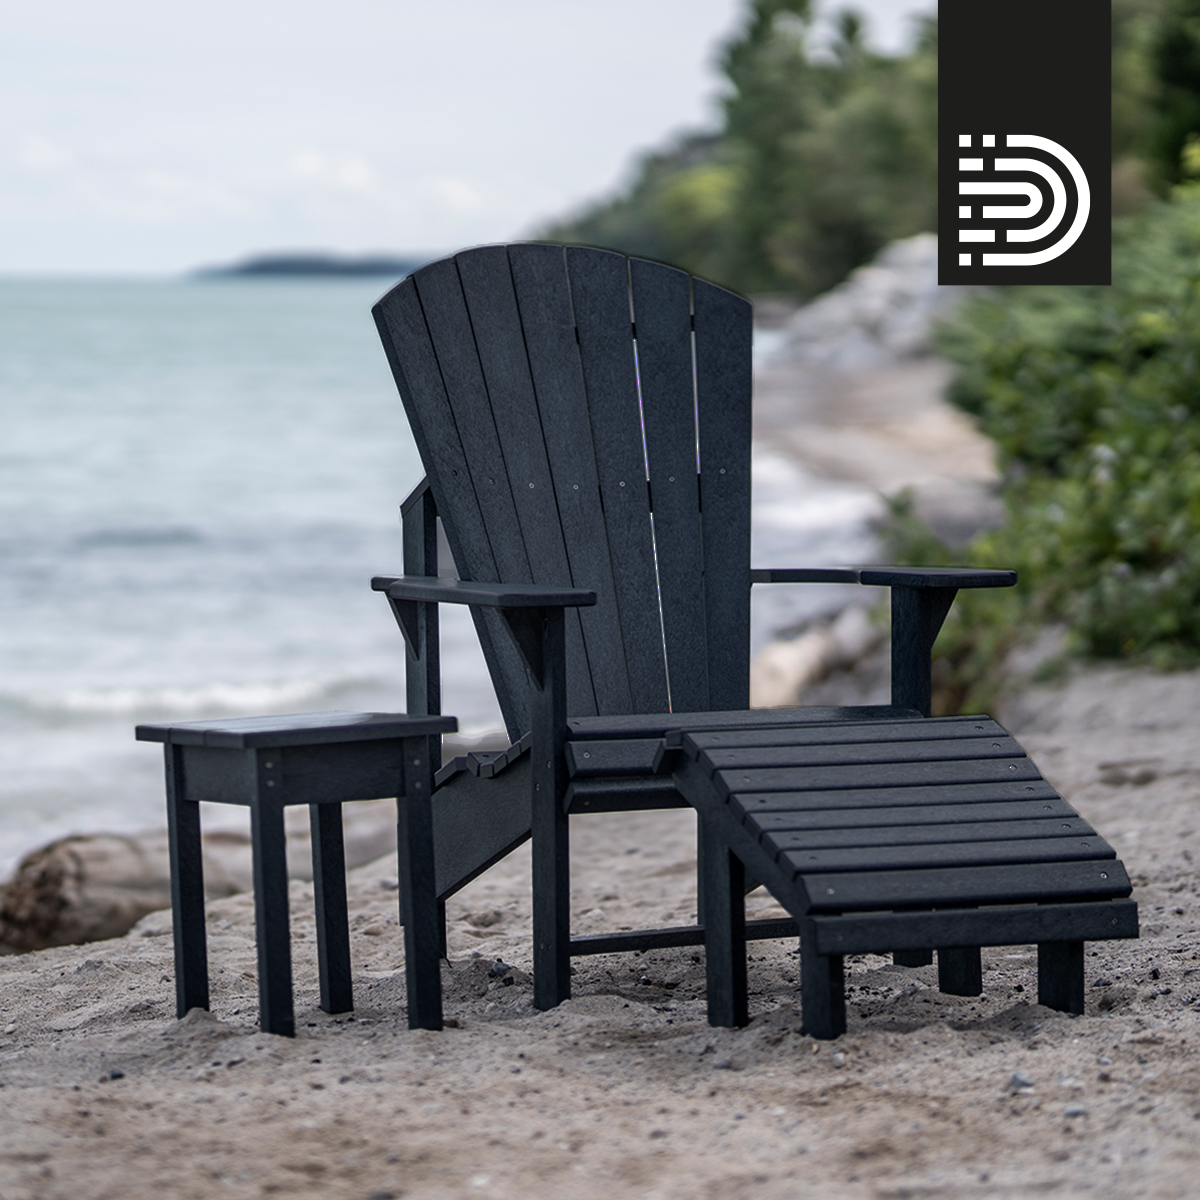 C03 Upright Adirondack Chair - black 14